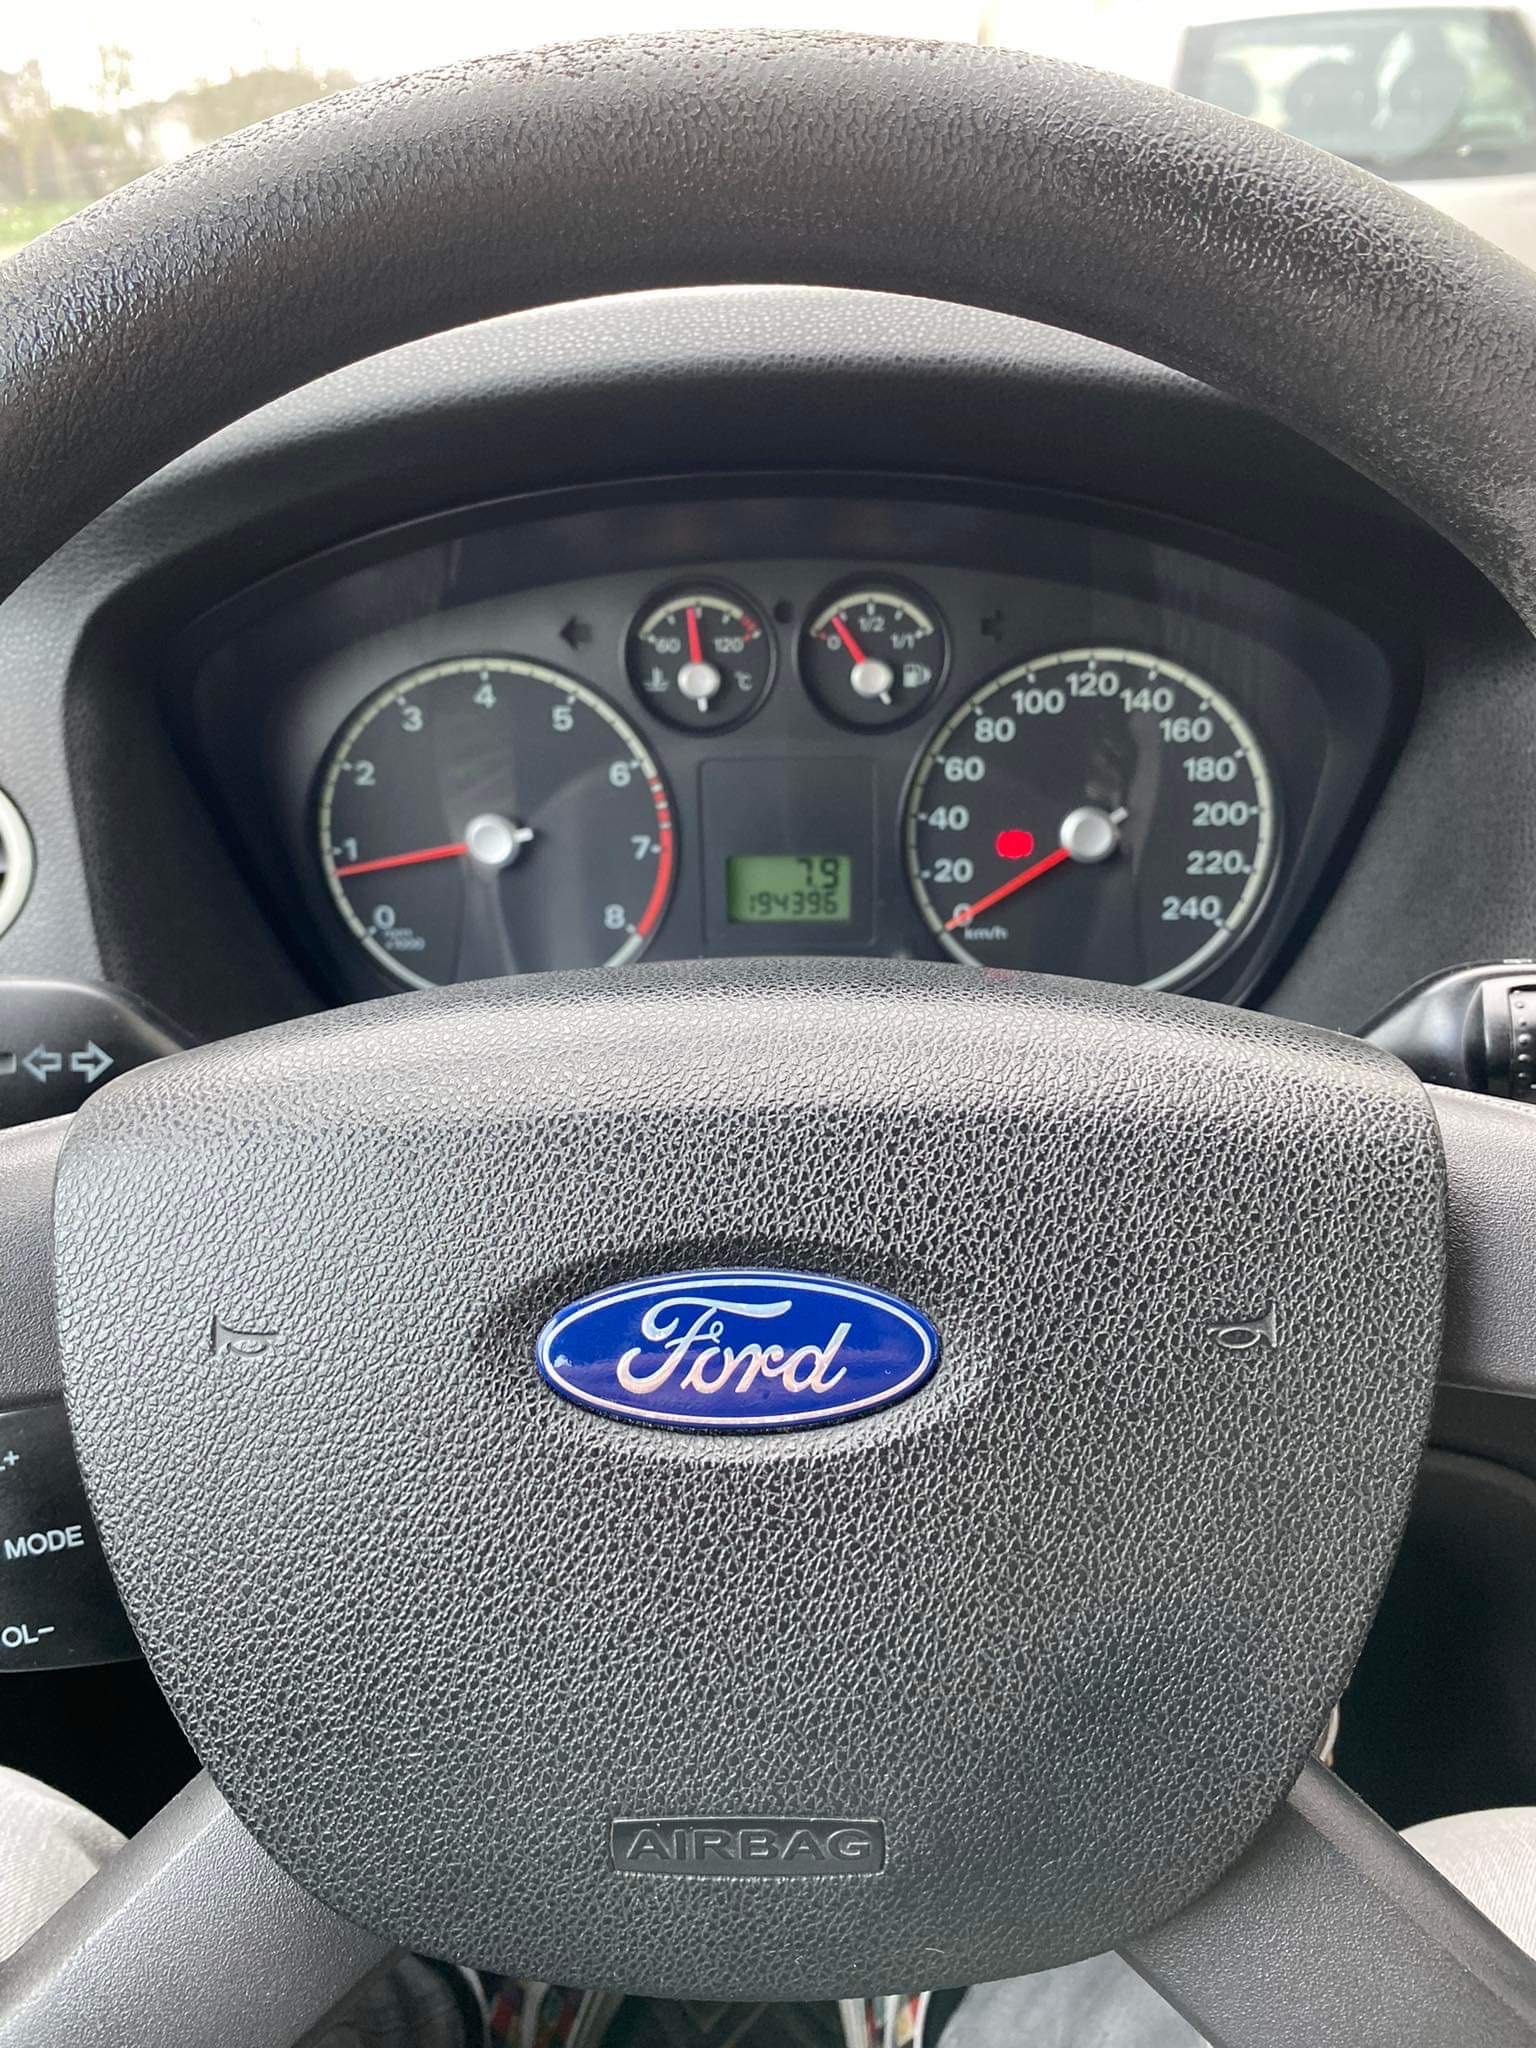 Ford focus 2005 1.4 gasolina